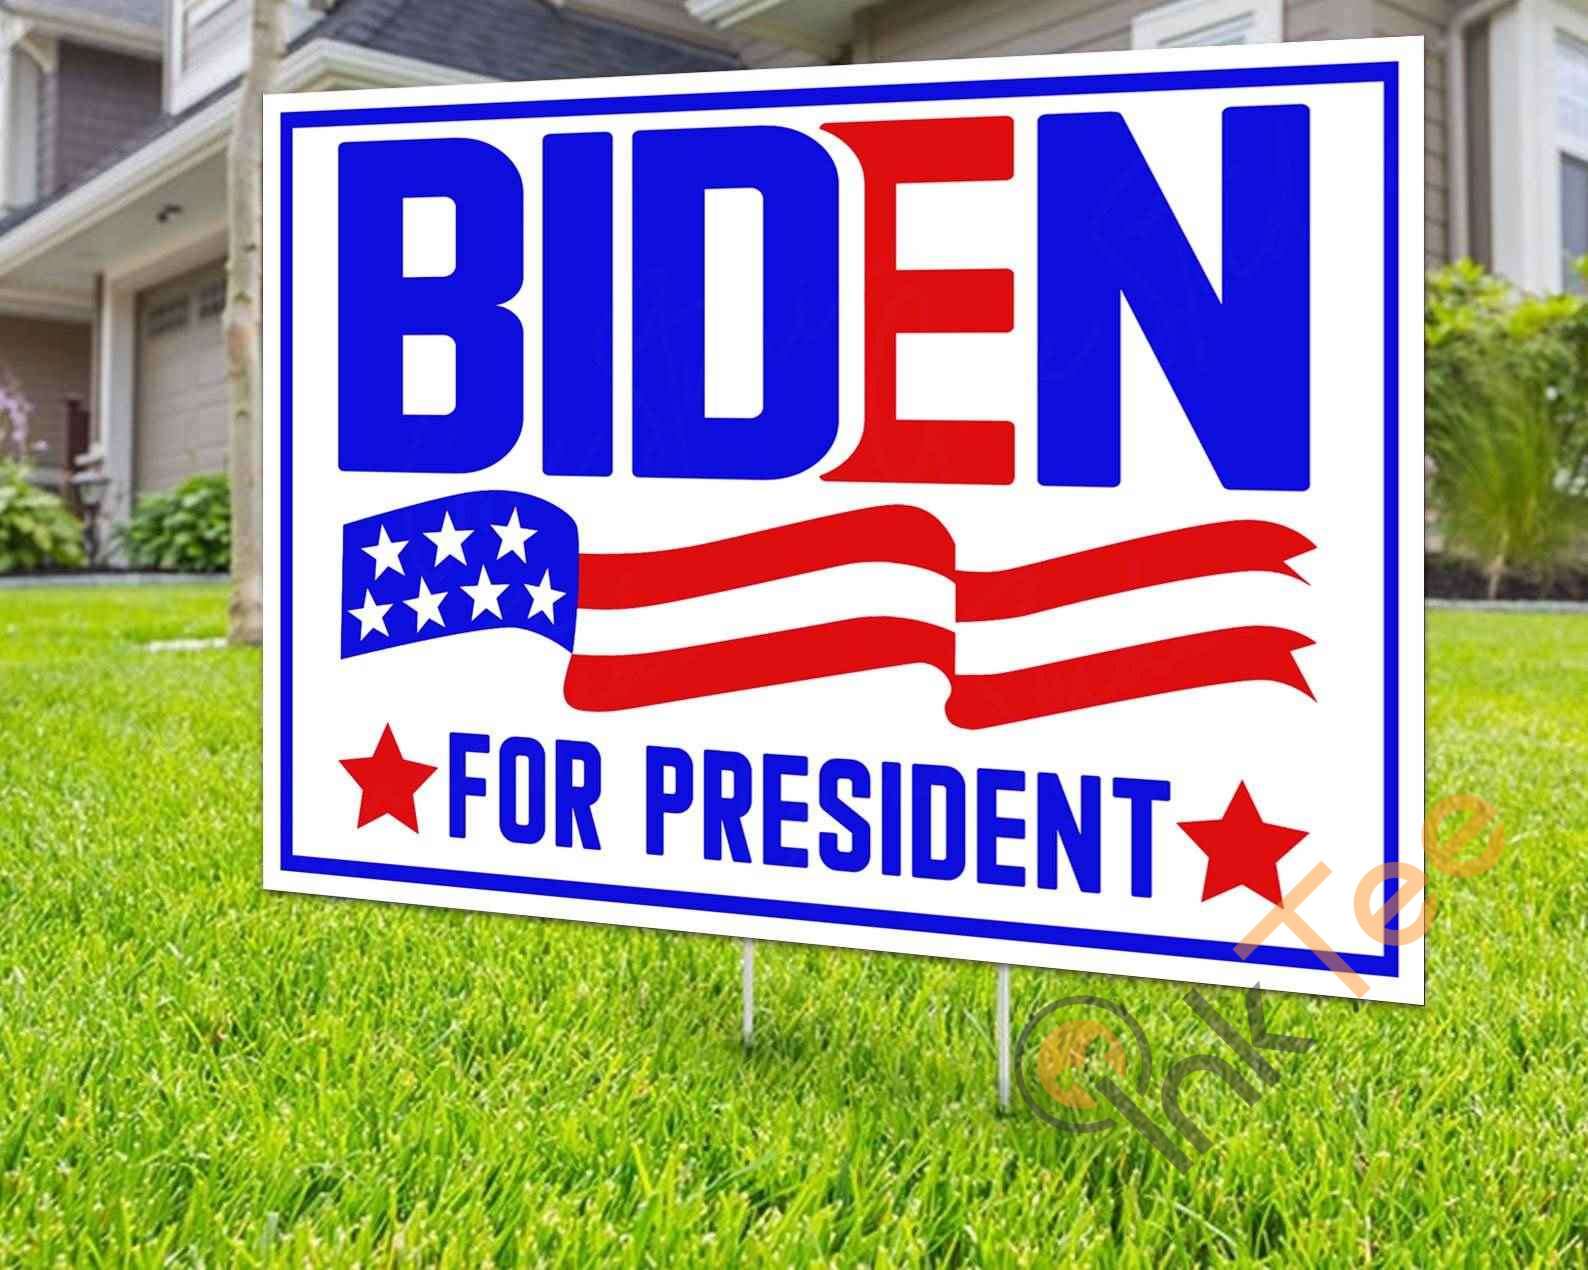 Joe Biden For President Political Campaign 2020 Election American Yard Sign